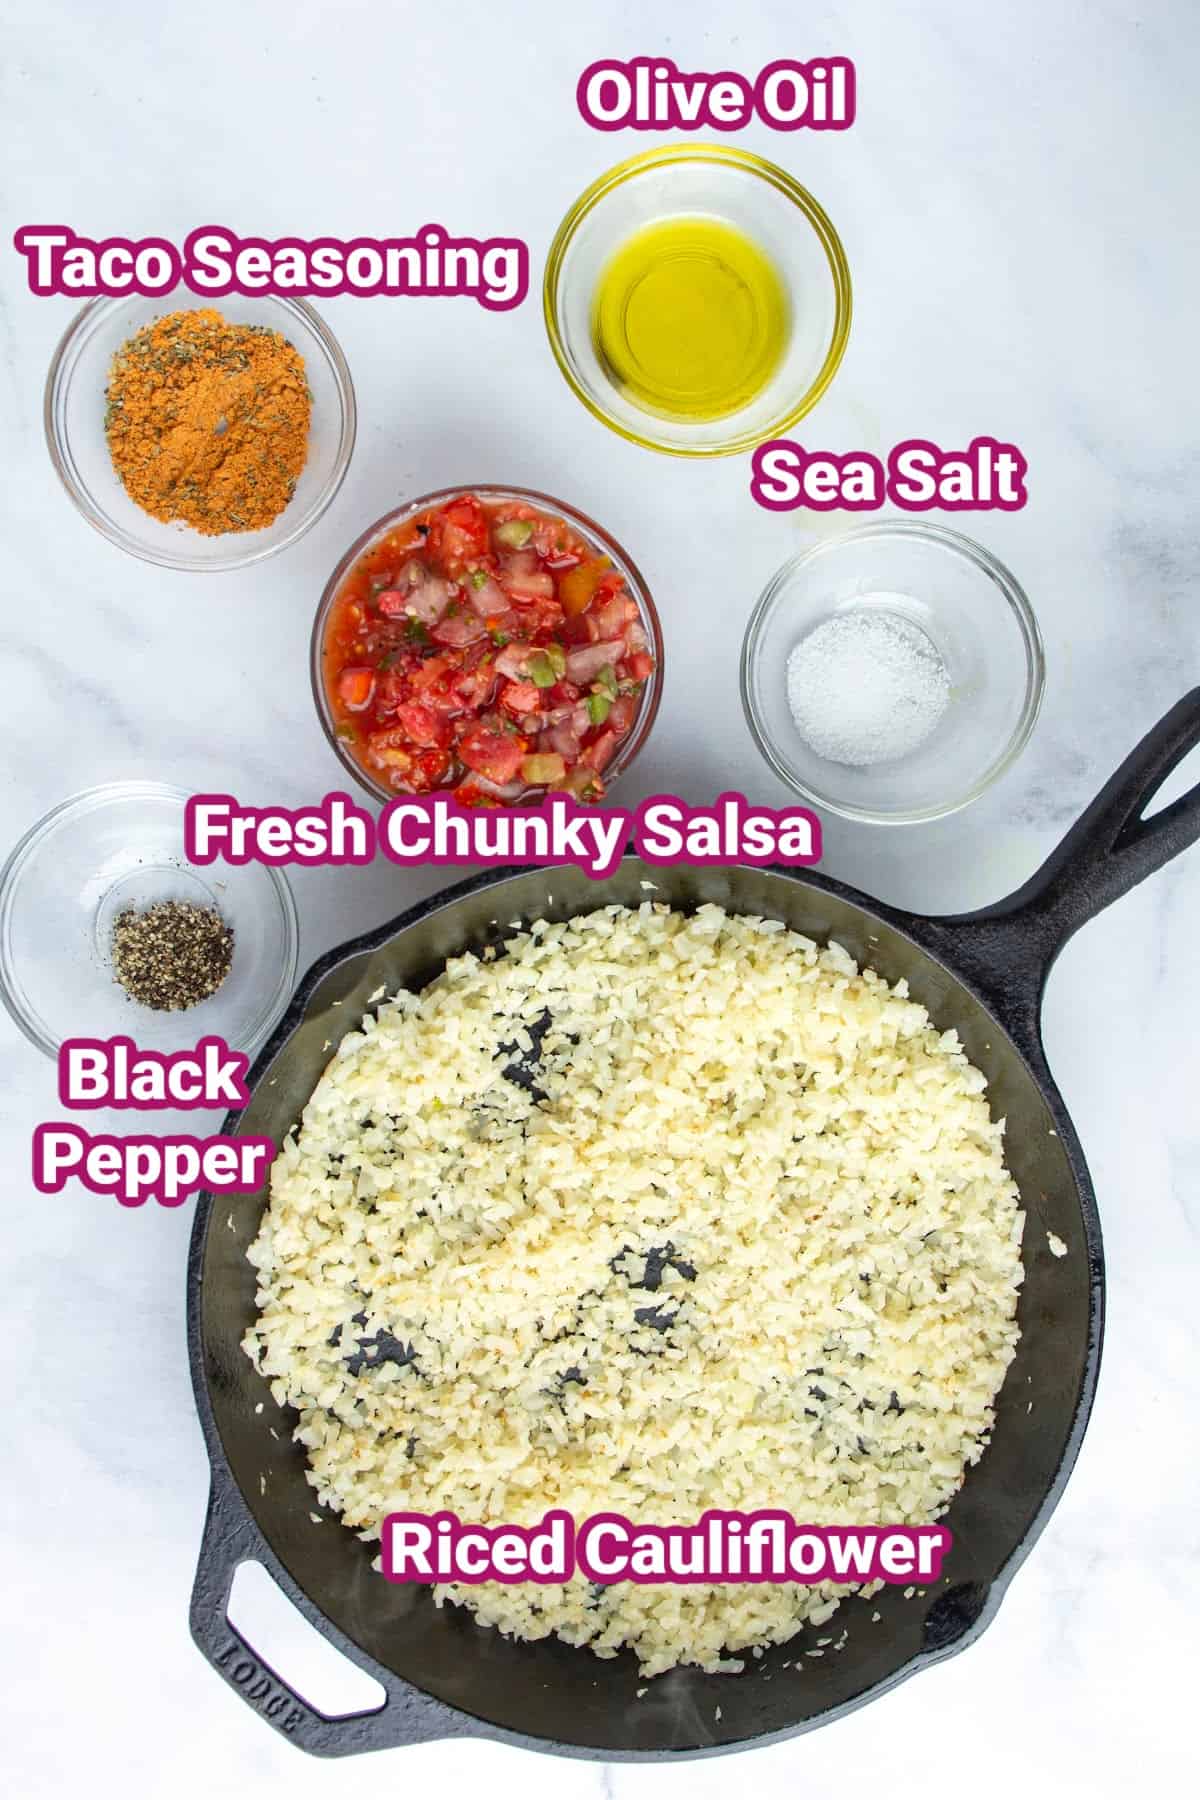 ingredients needed for basic Spanish cauliflower rice like olive oil, taco seasoning, salt, chunky salsa, black pepper, and cauliflower rice